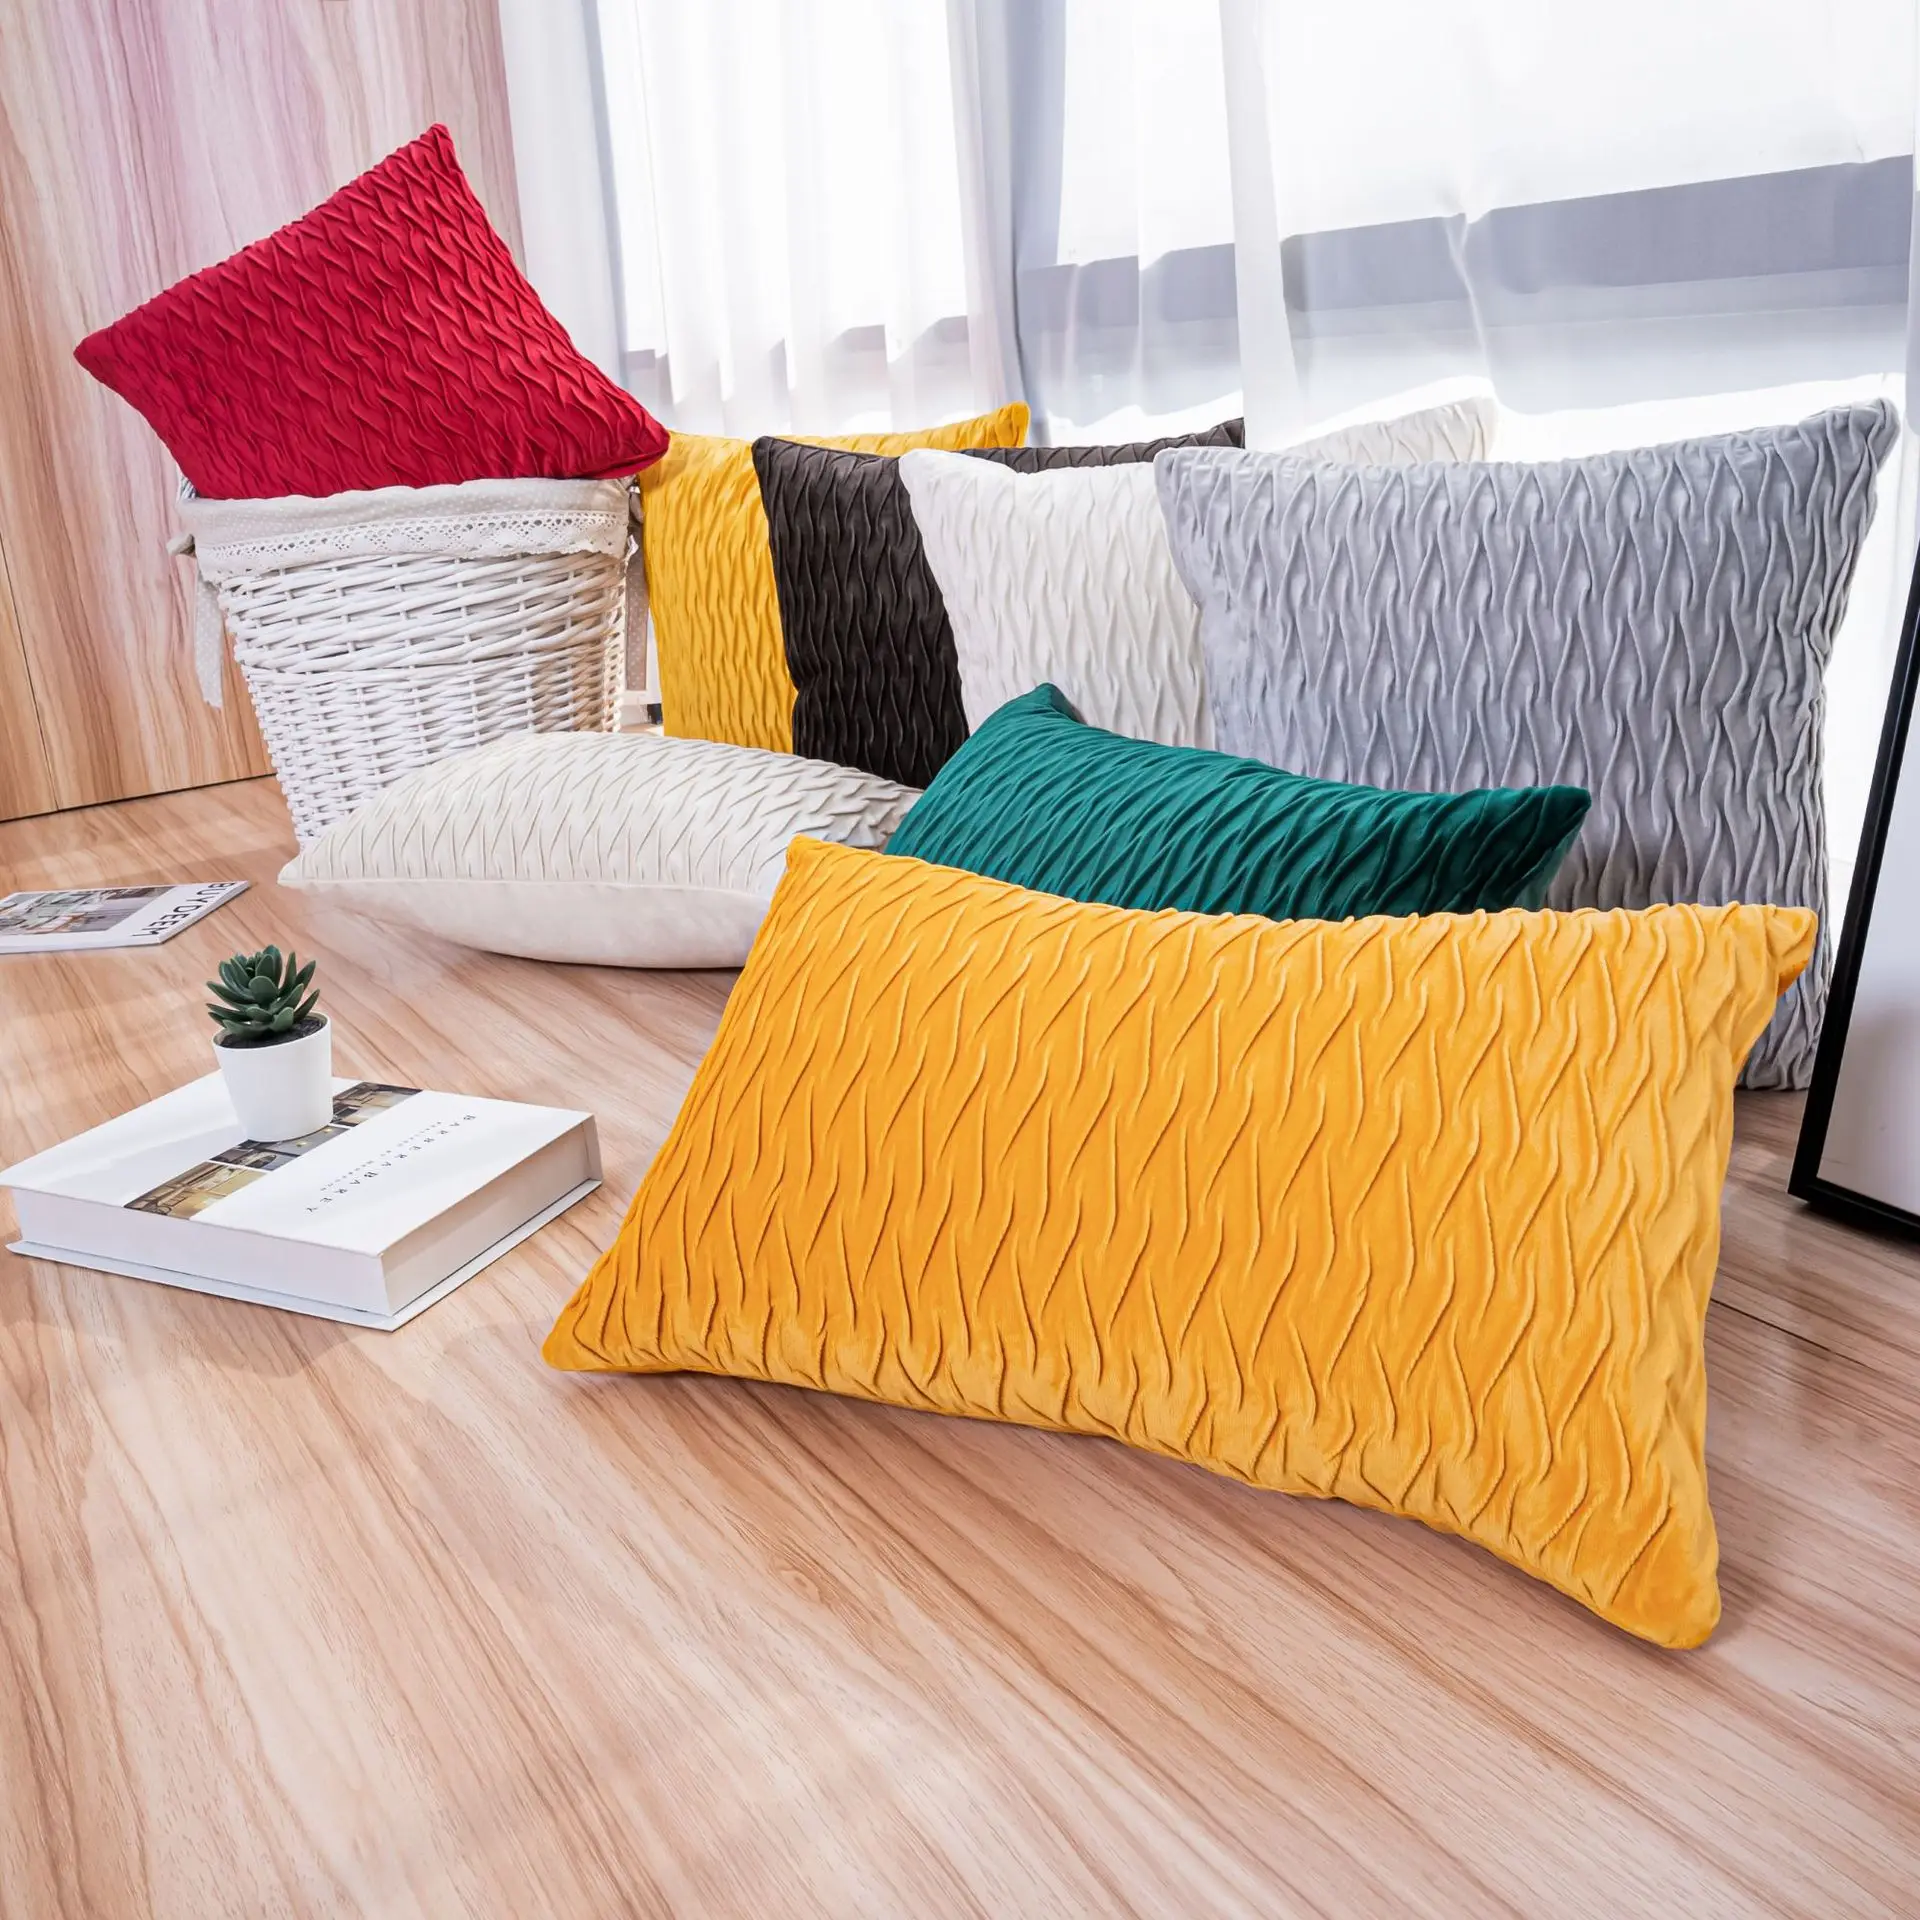 Cojines de almohada decorativos con pliegues de rayas onduladas, funda de cojín de tela de terciopelo para sala de estar, sofá, cama, decoración del hogar